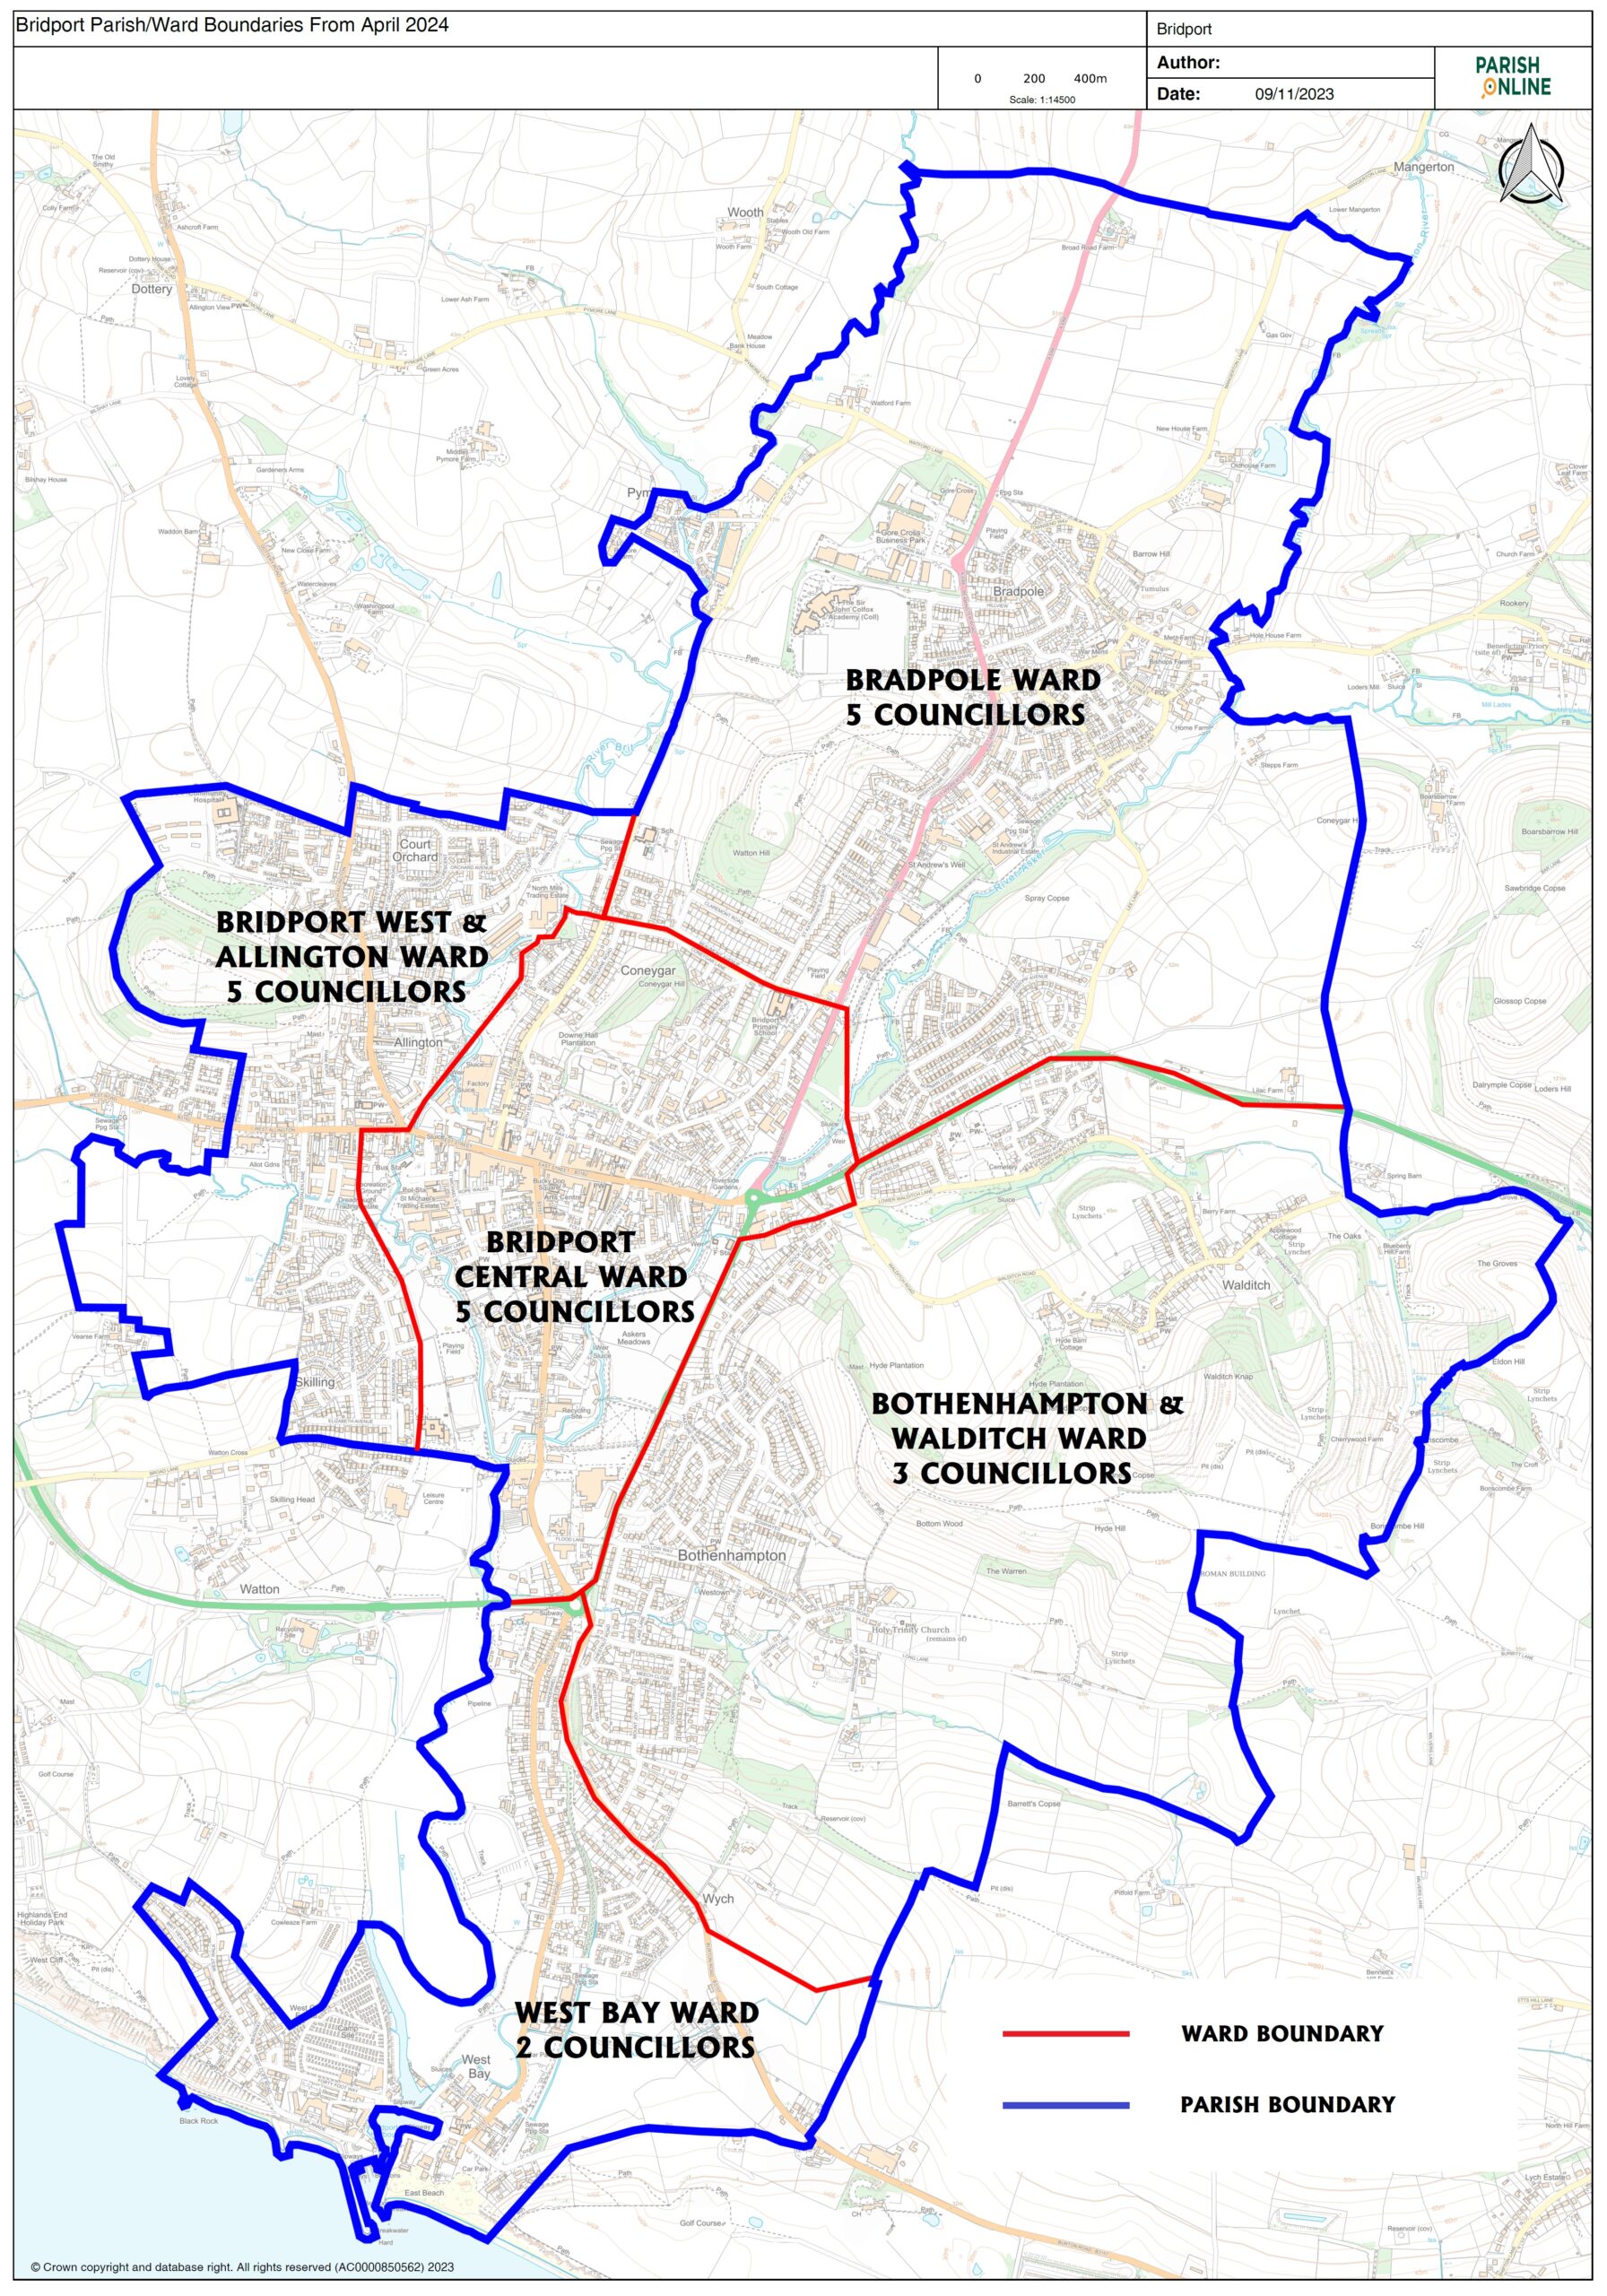 Bridport parish and ward boundaries from April 2024